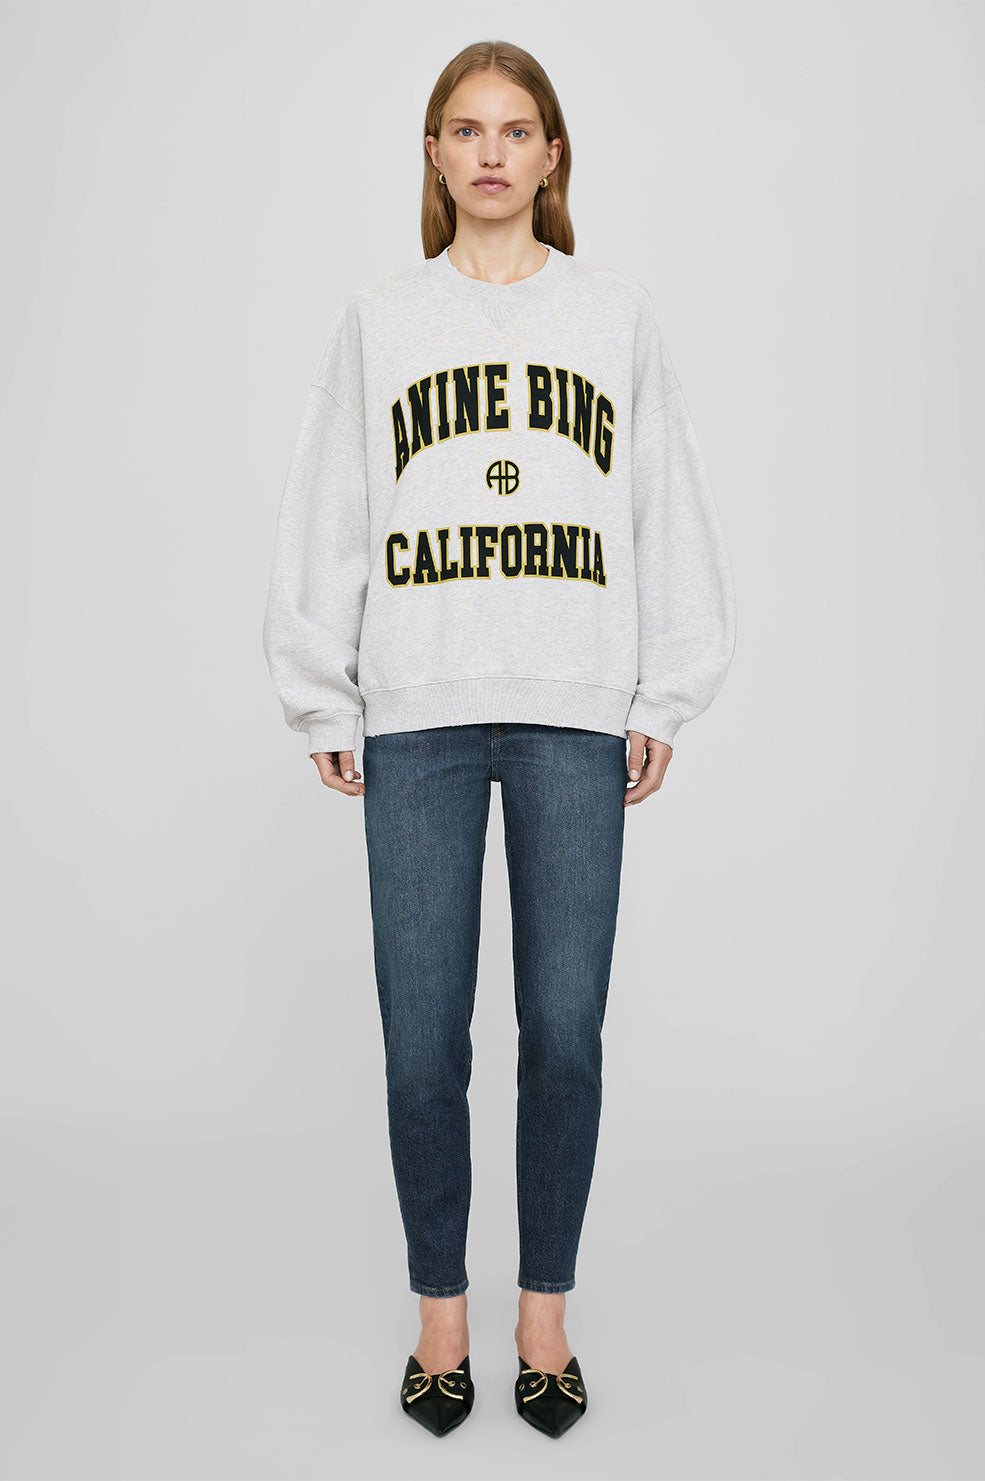 Jaci Sweatshirt Anine Bing California - Heather Grey